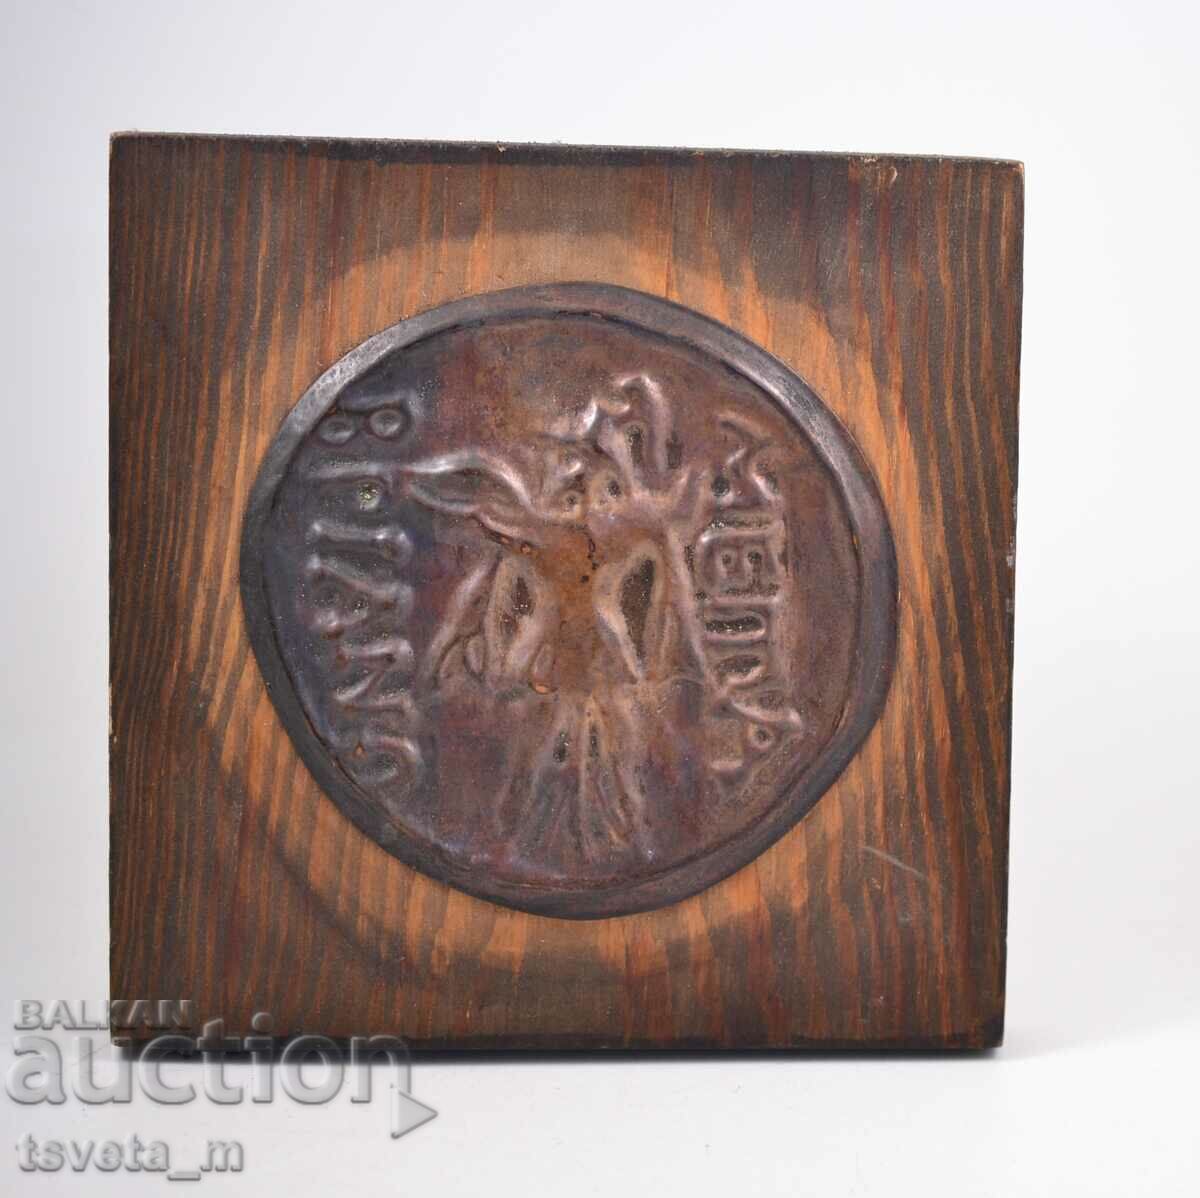 Decorative wooden panel, antique coin, copper